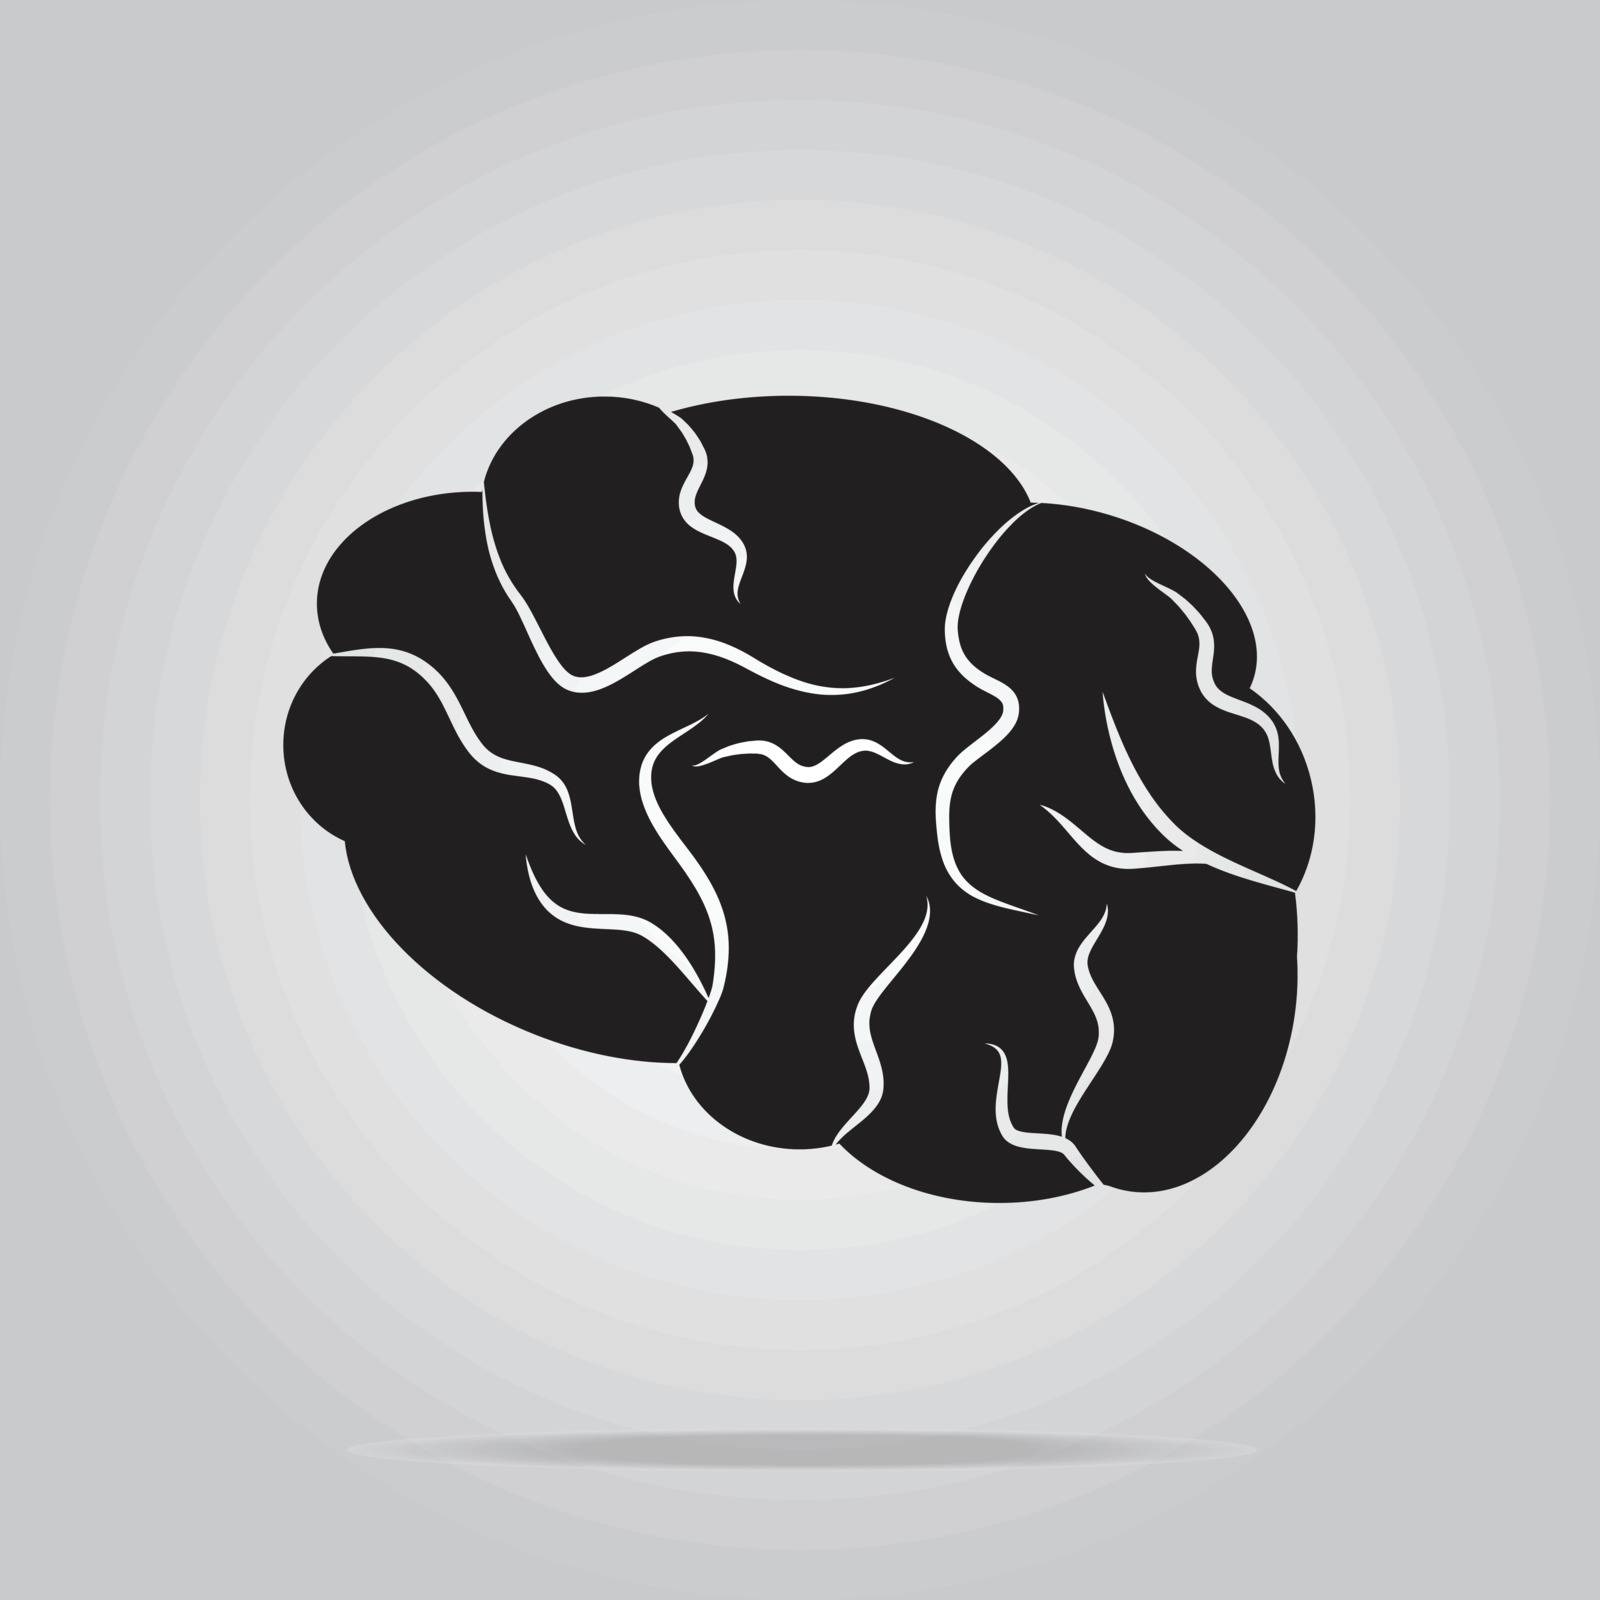 Brain icon by Kheat